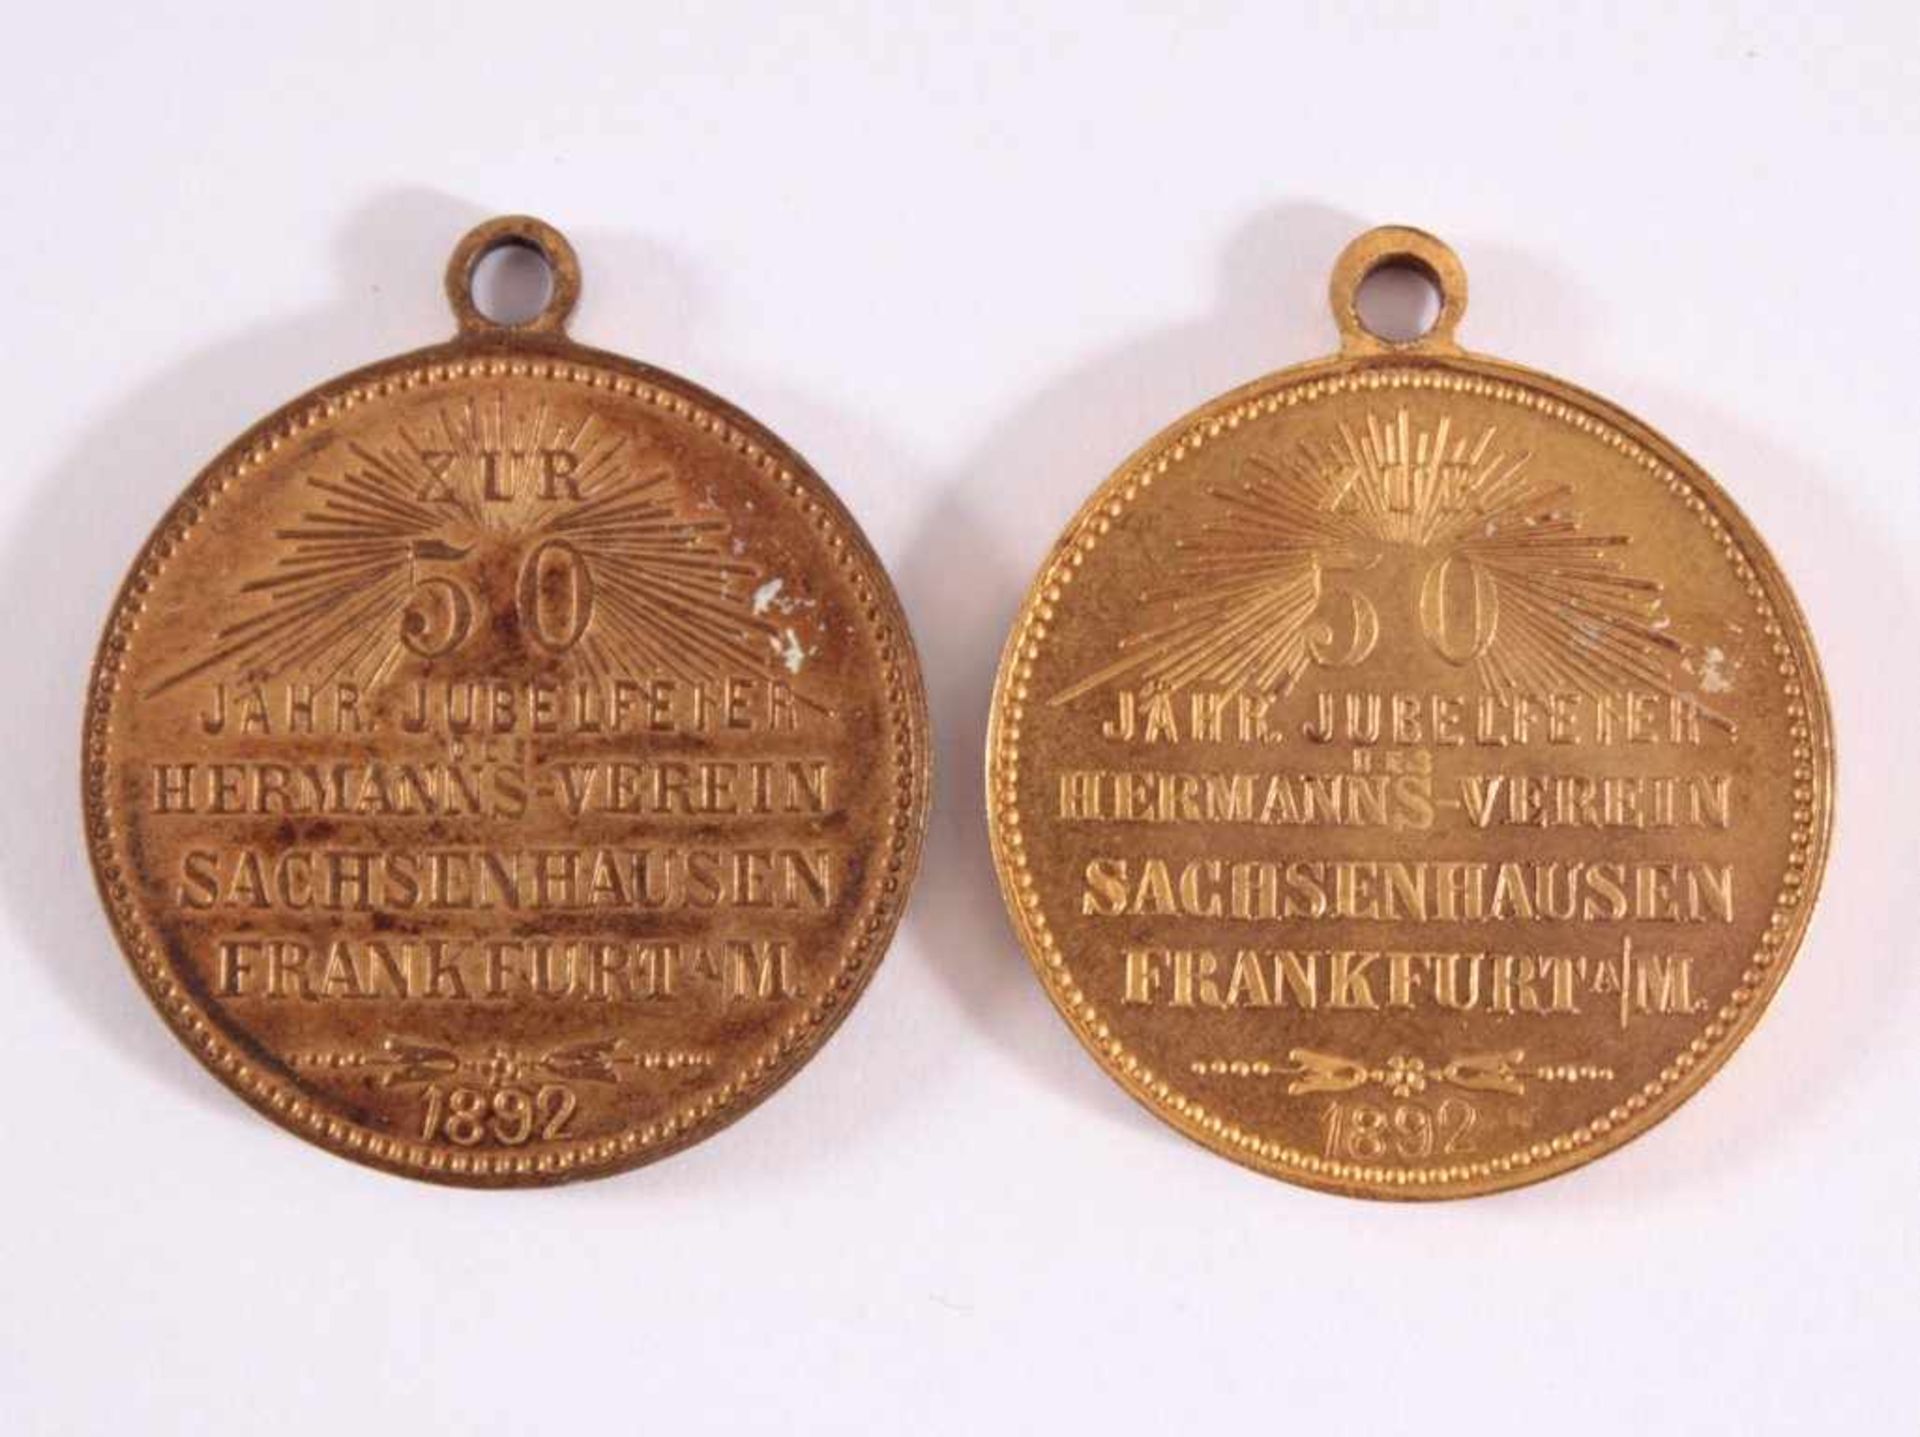 2 Medaillen 50 jährigen Feier, Herrmanns Verein, FrankfurtSachsenhausen, "Kühn entflammt allesammt - Image 2 of 2